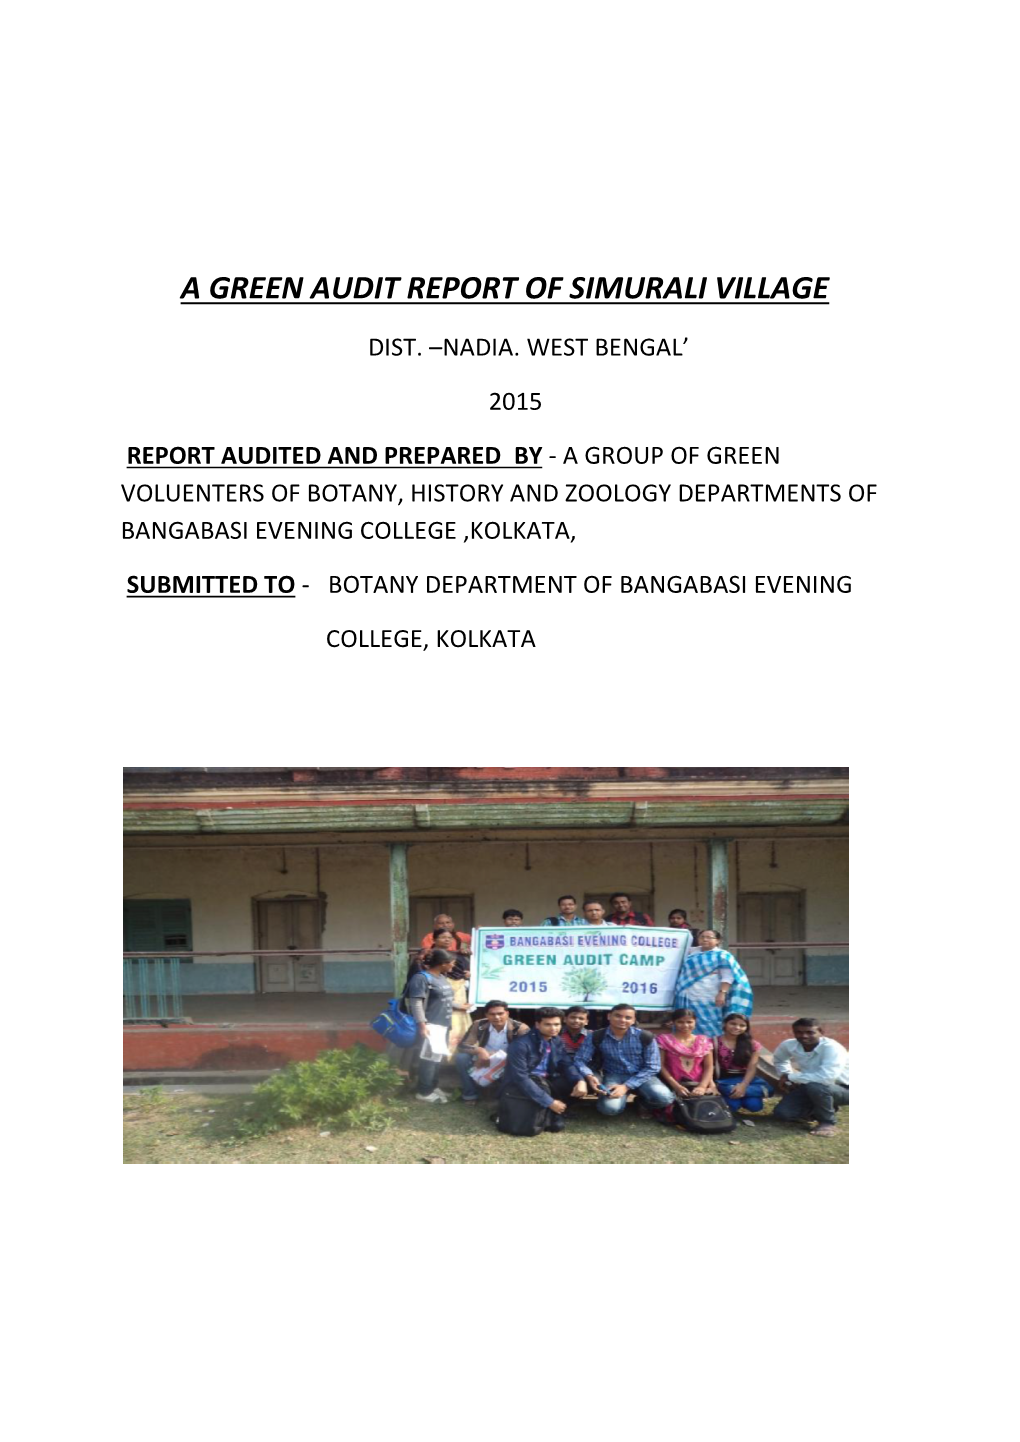 A Green Audit Report of Simurali Village